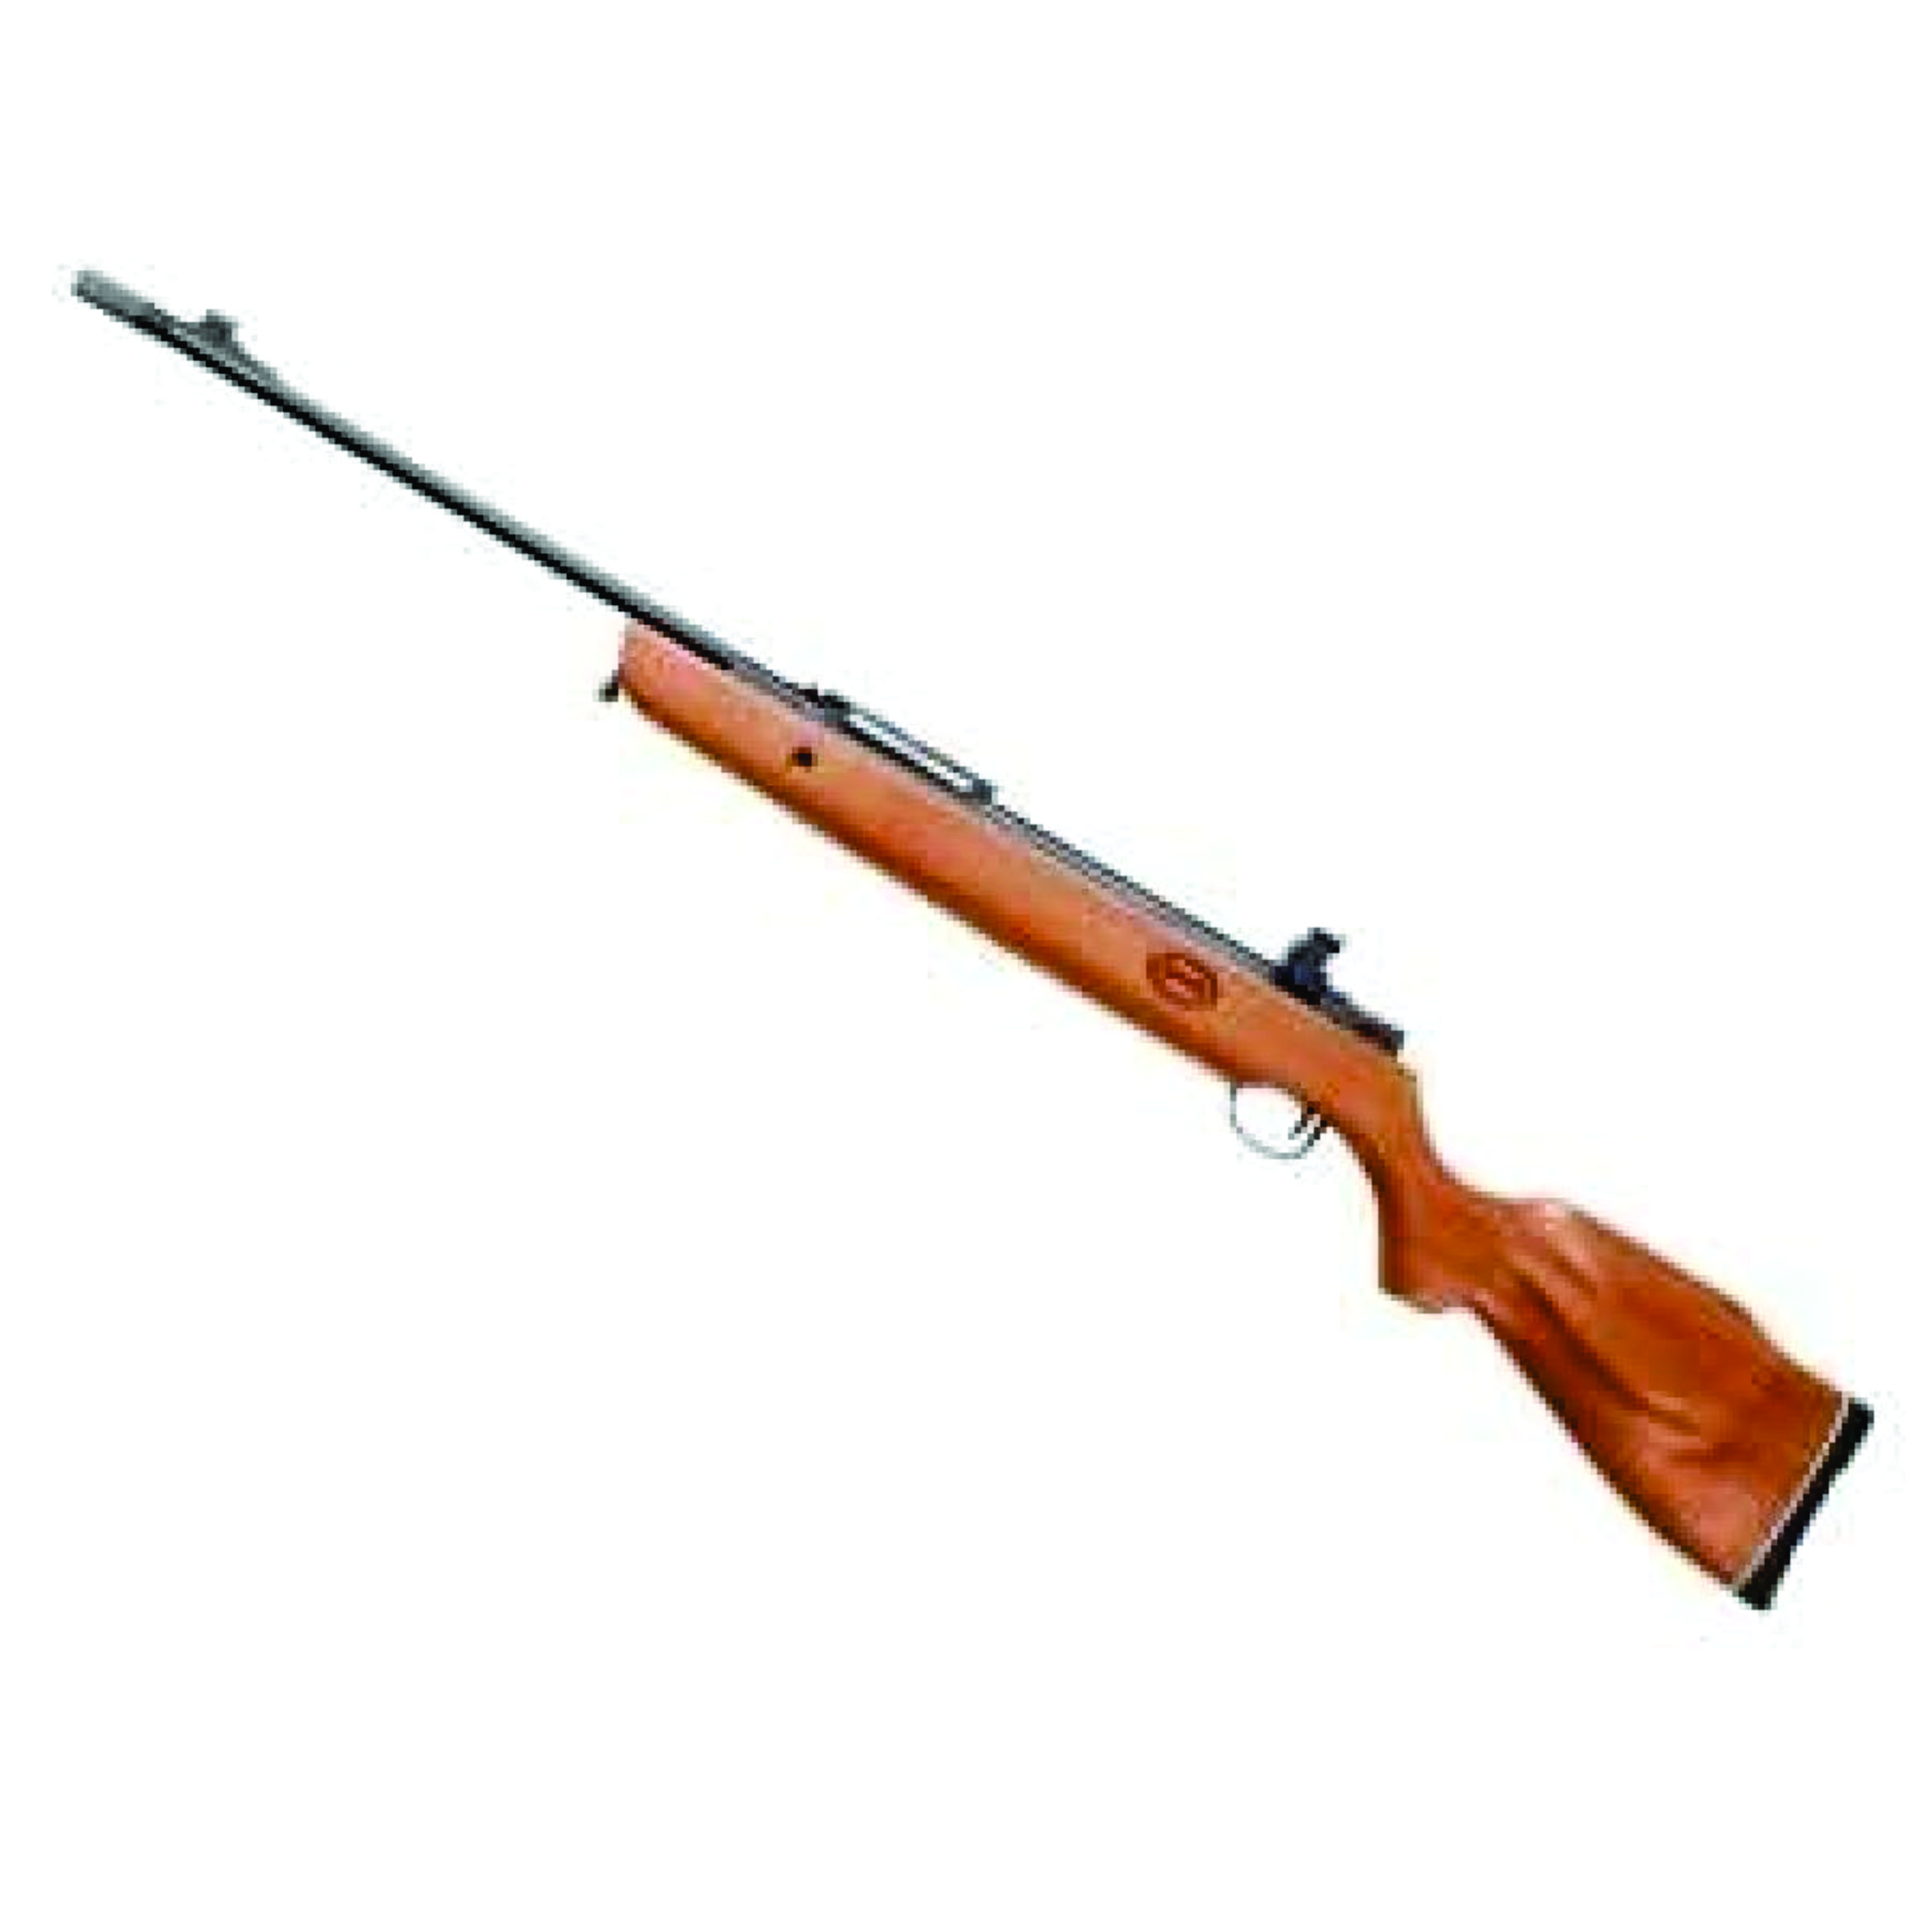 Rifle Mendoza calibre 5.5